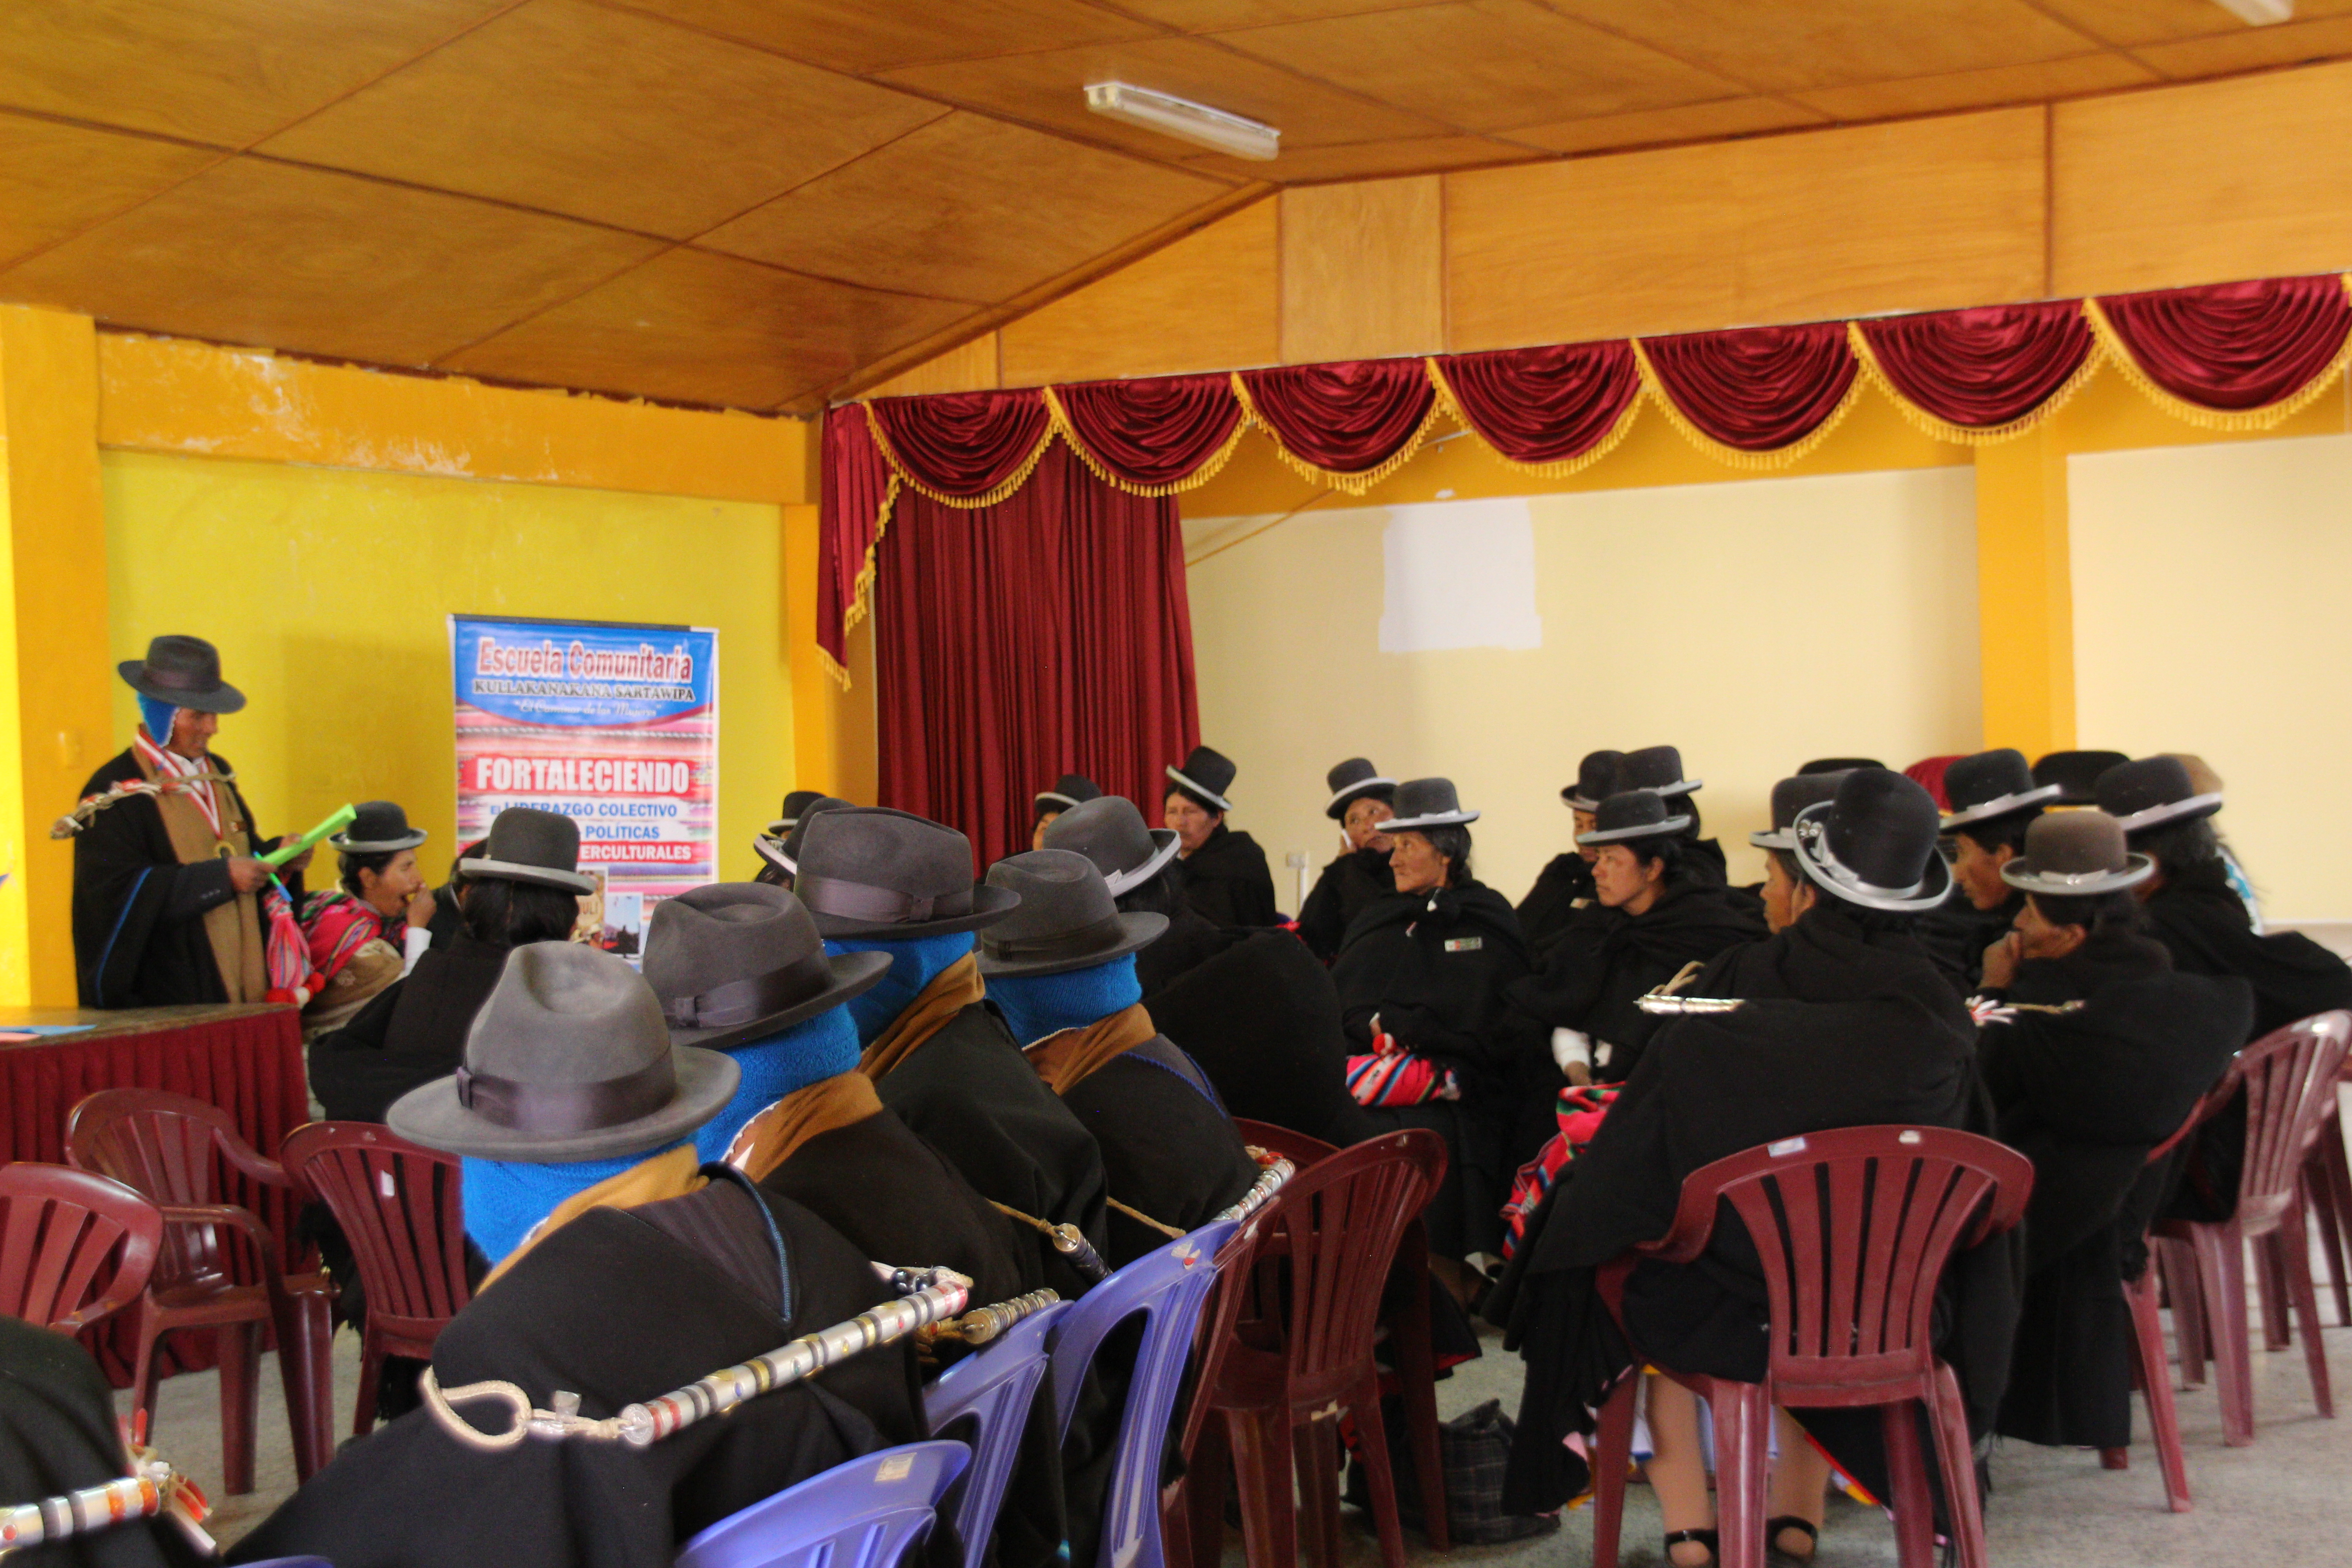 Autoridades participan en el segundo taller de la Escuela Comunitaria “Kullakanakana Sartawipa”